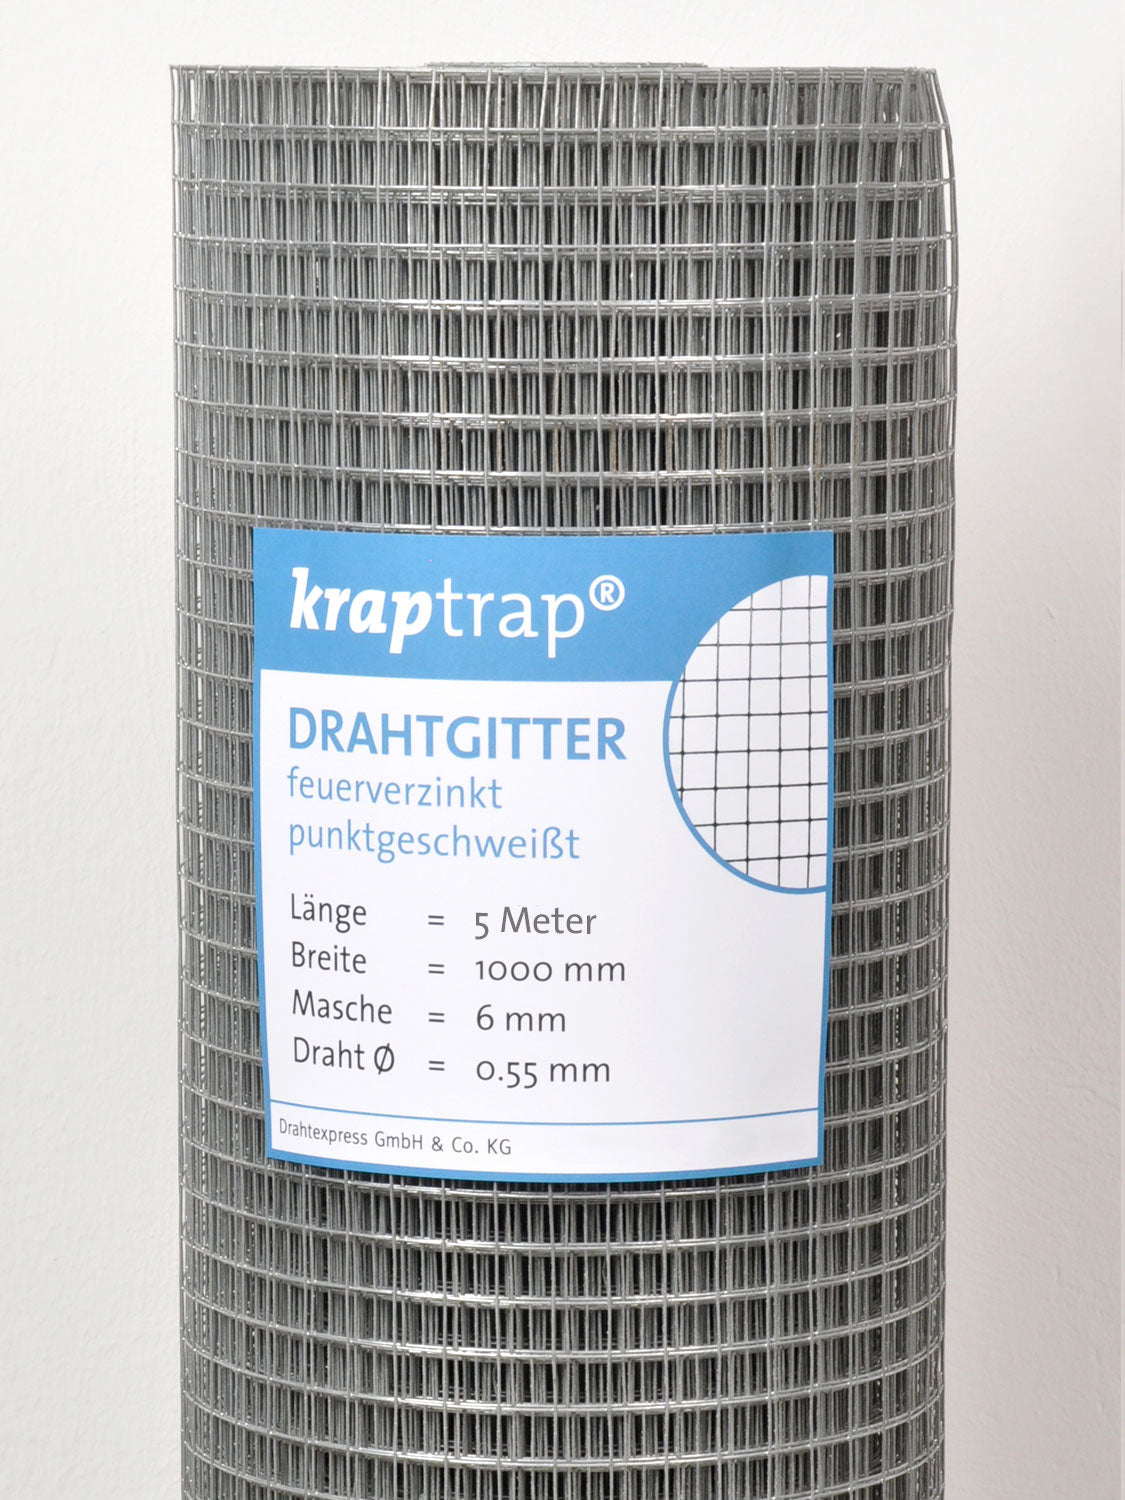 KrapTrap® feuerverzinktes Drahtgitter 6x6 mm mit 0,55 mm Stärke